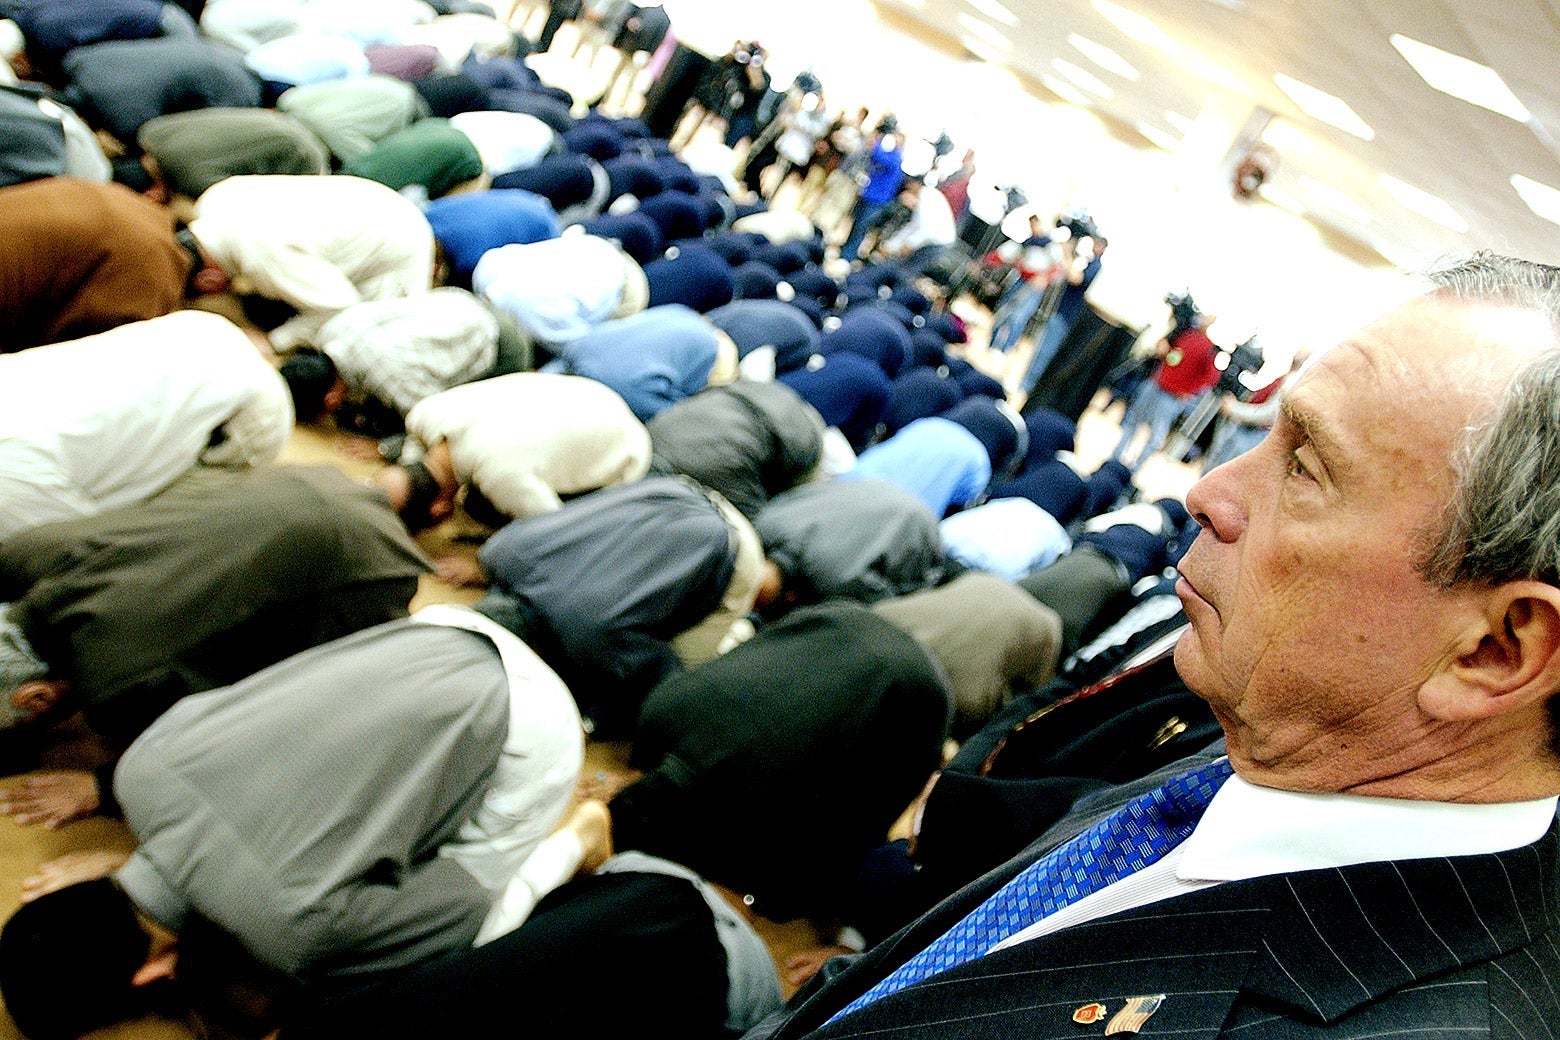 Michael Bloomberg looks over Muslims kneeling in prayer.